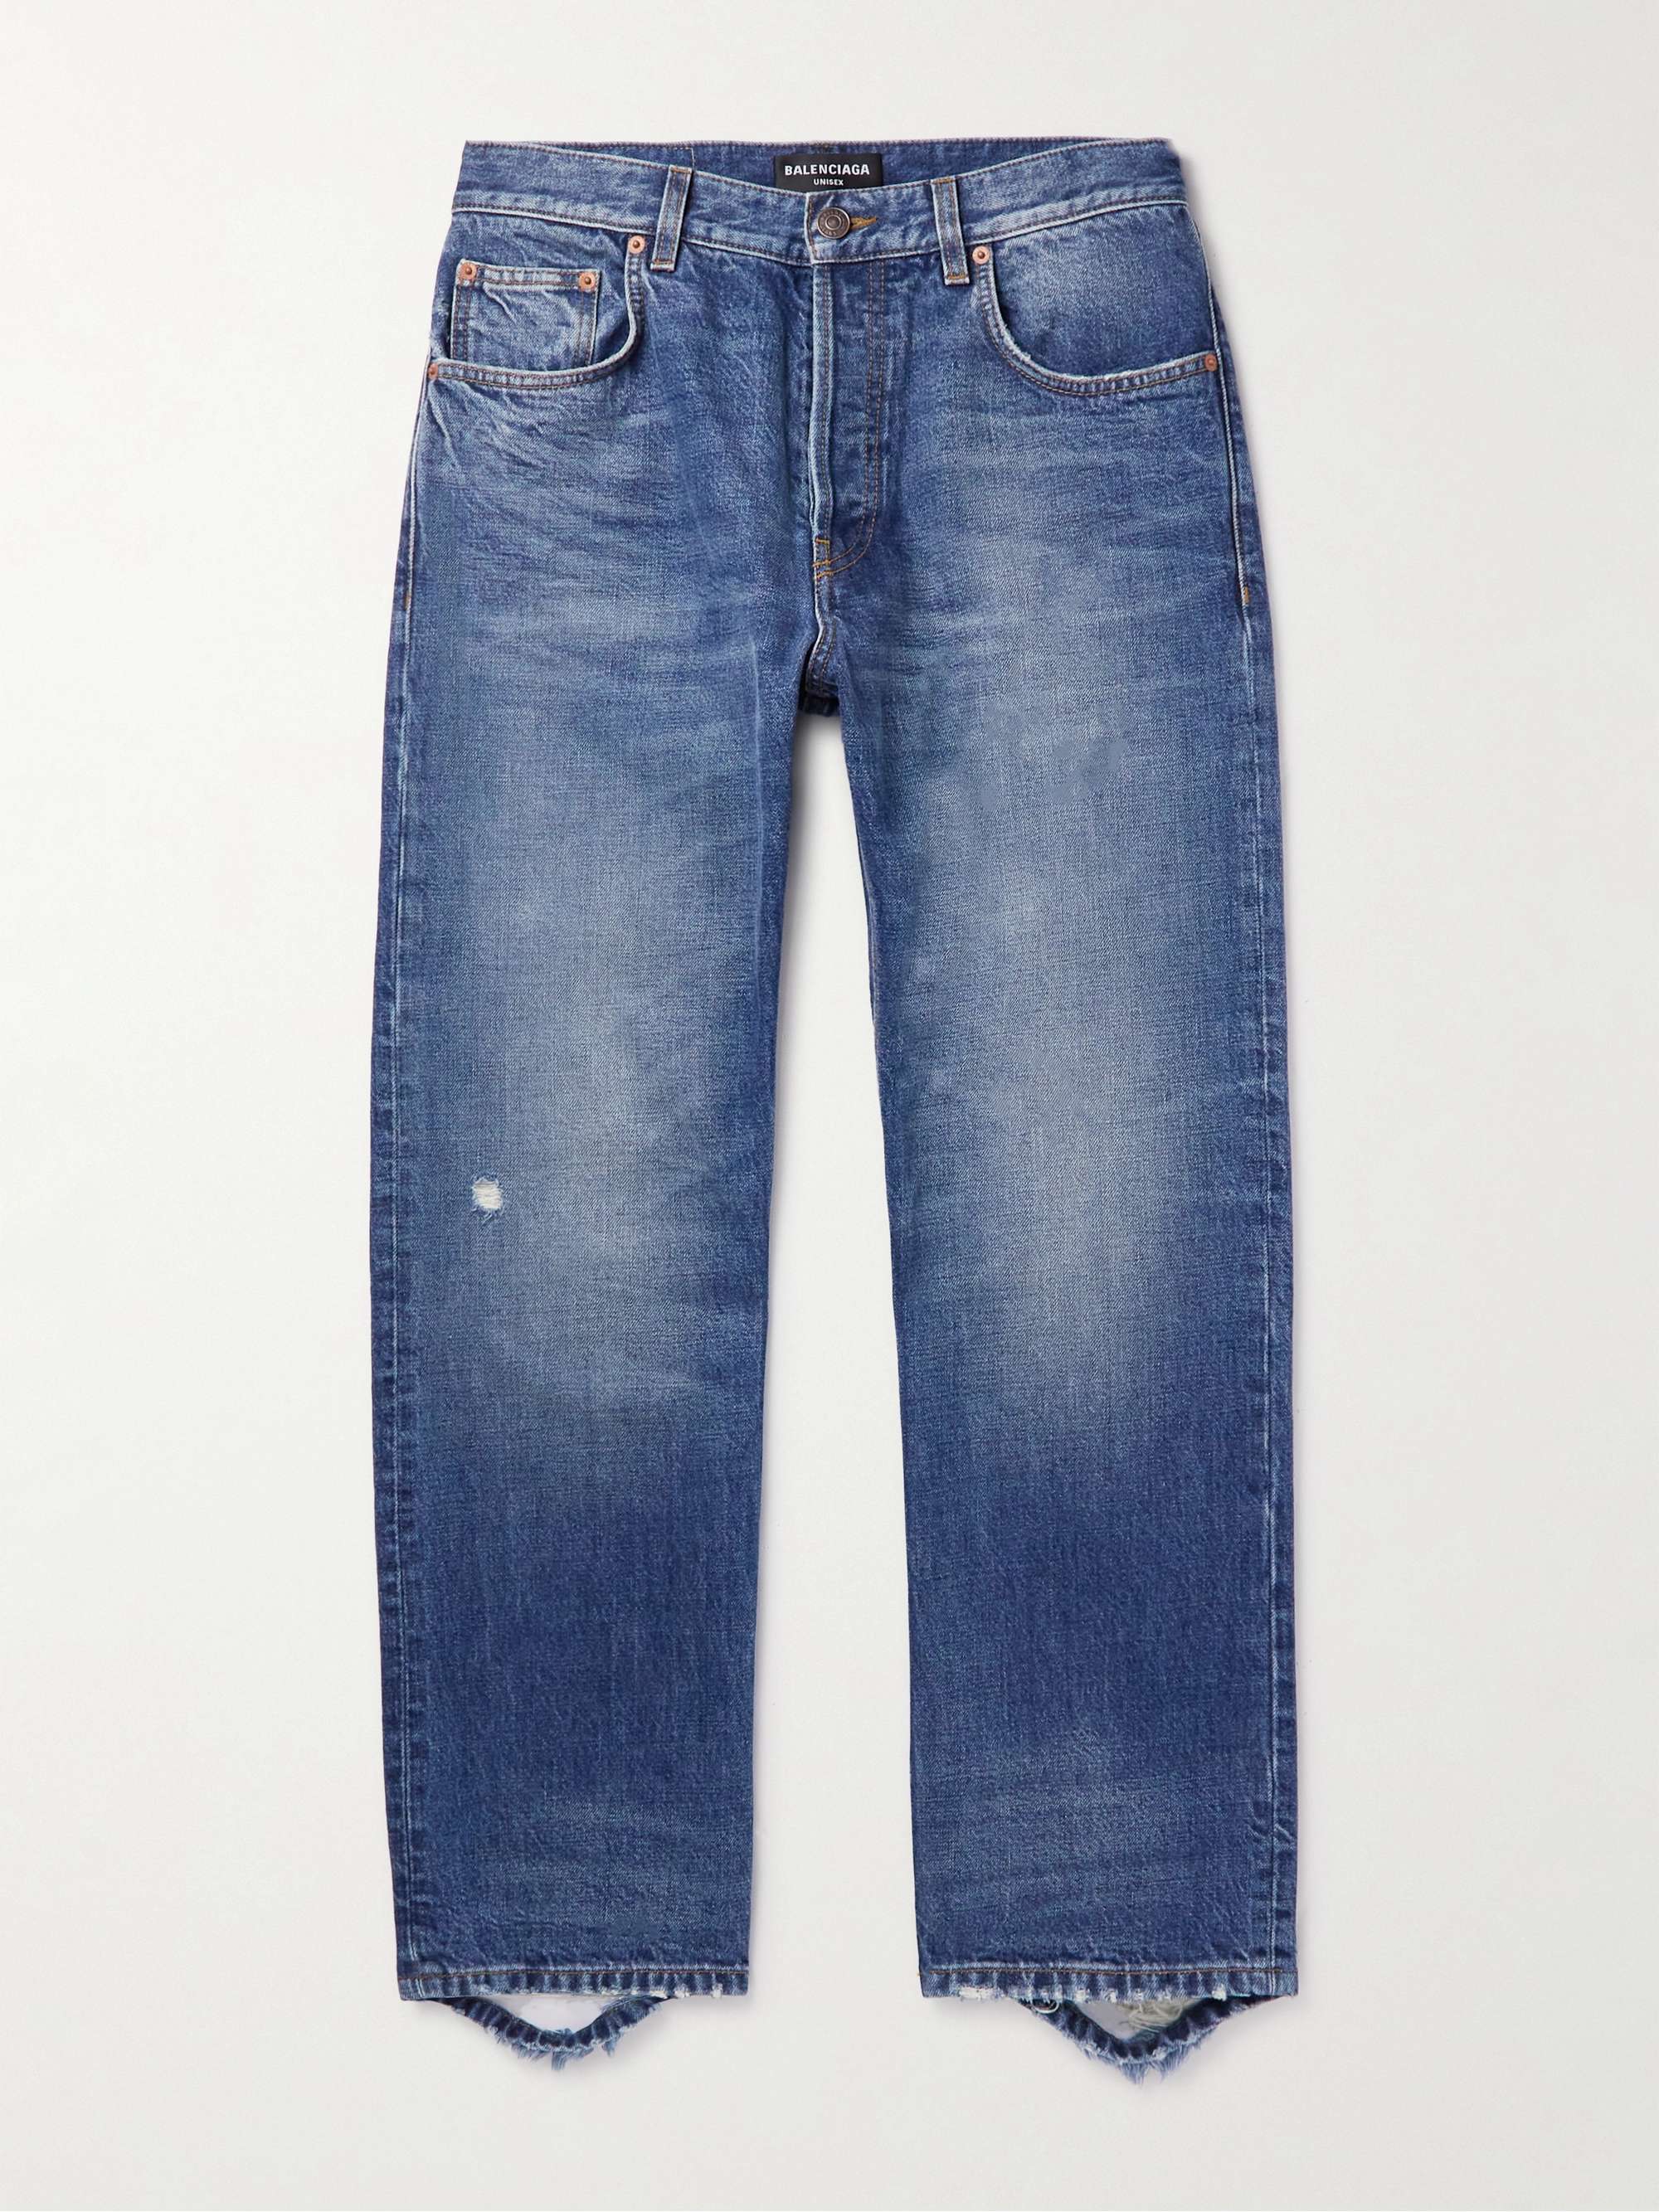 BALENCIAGA Slim-Fit Distressed Jeans | MR PORTER